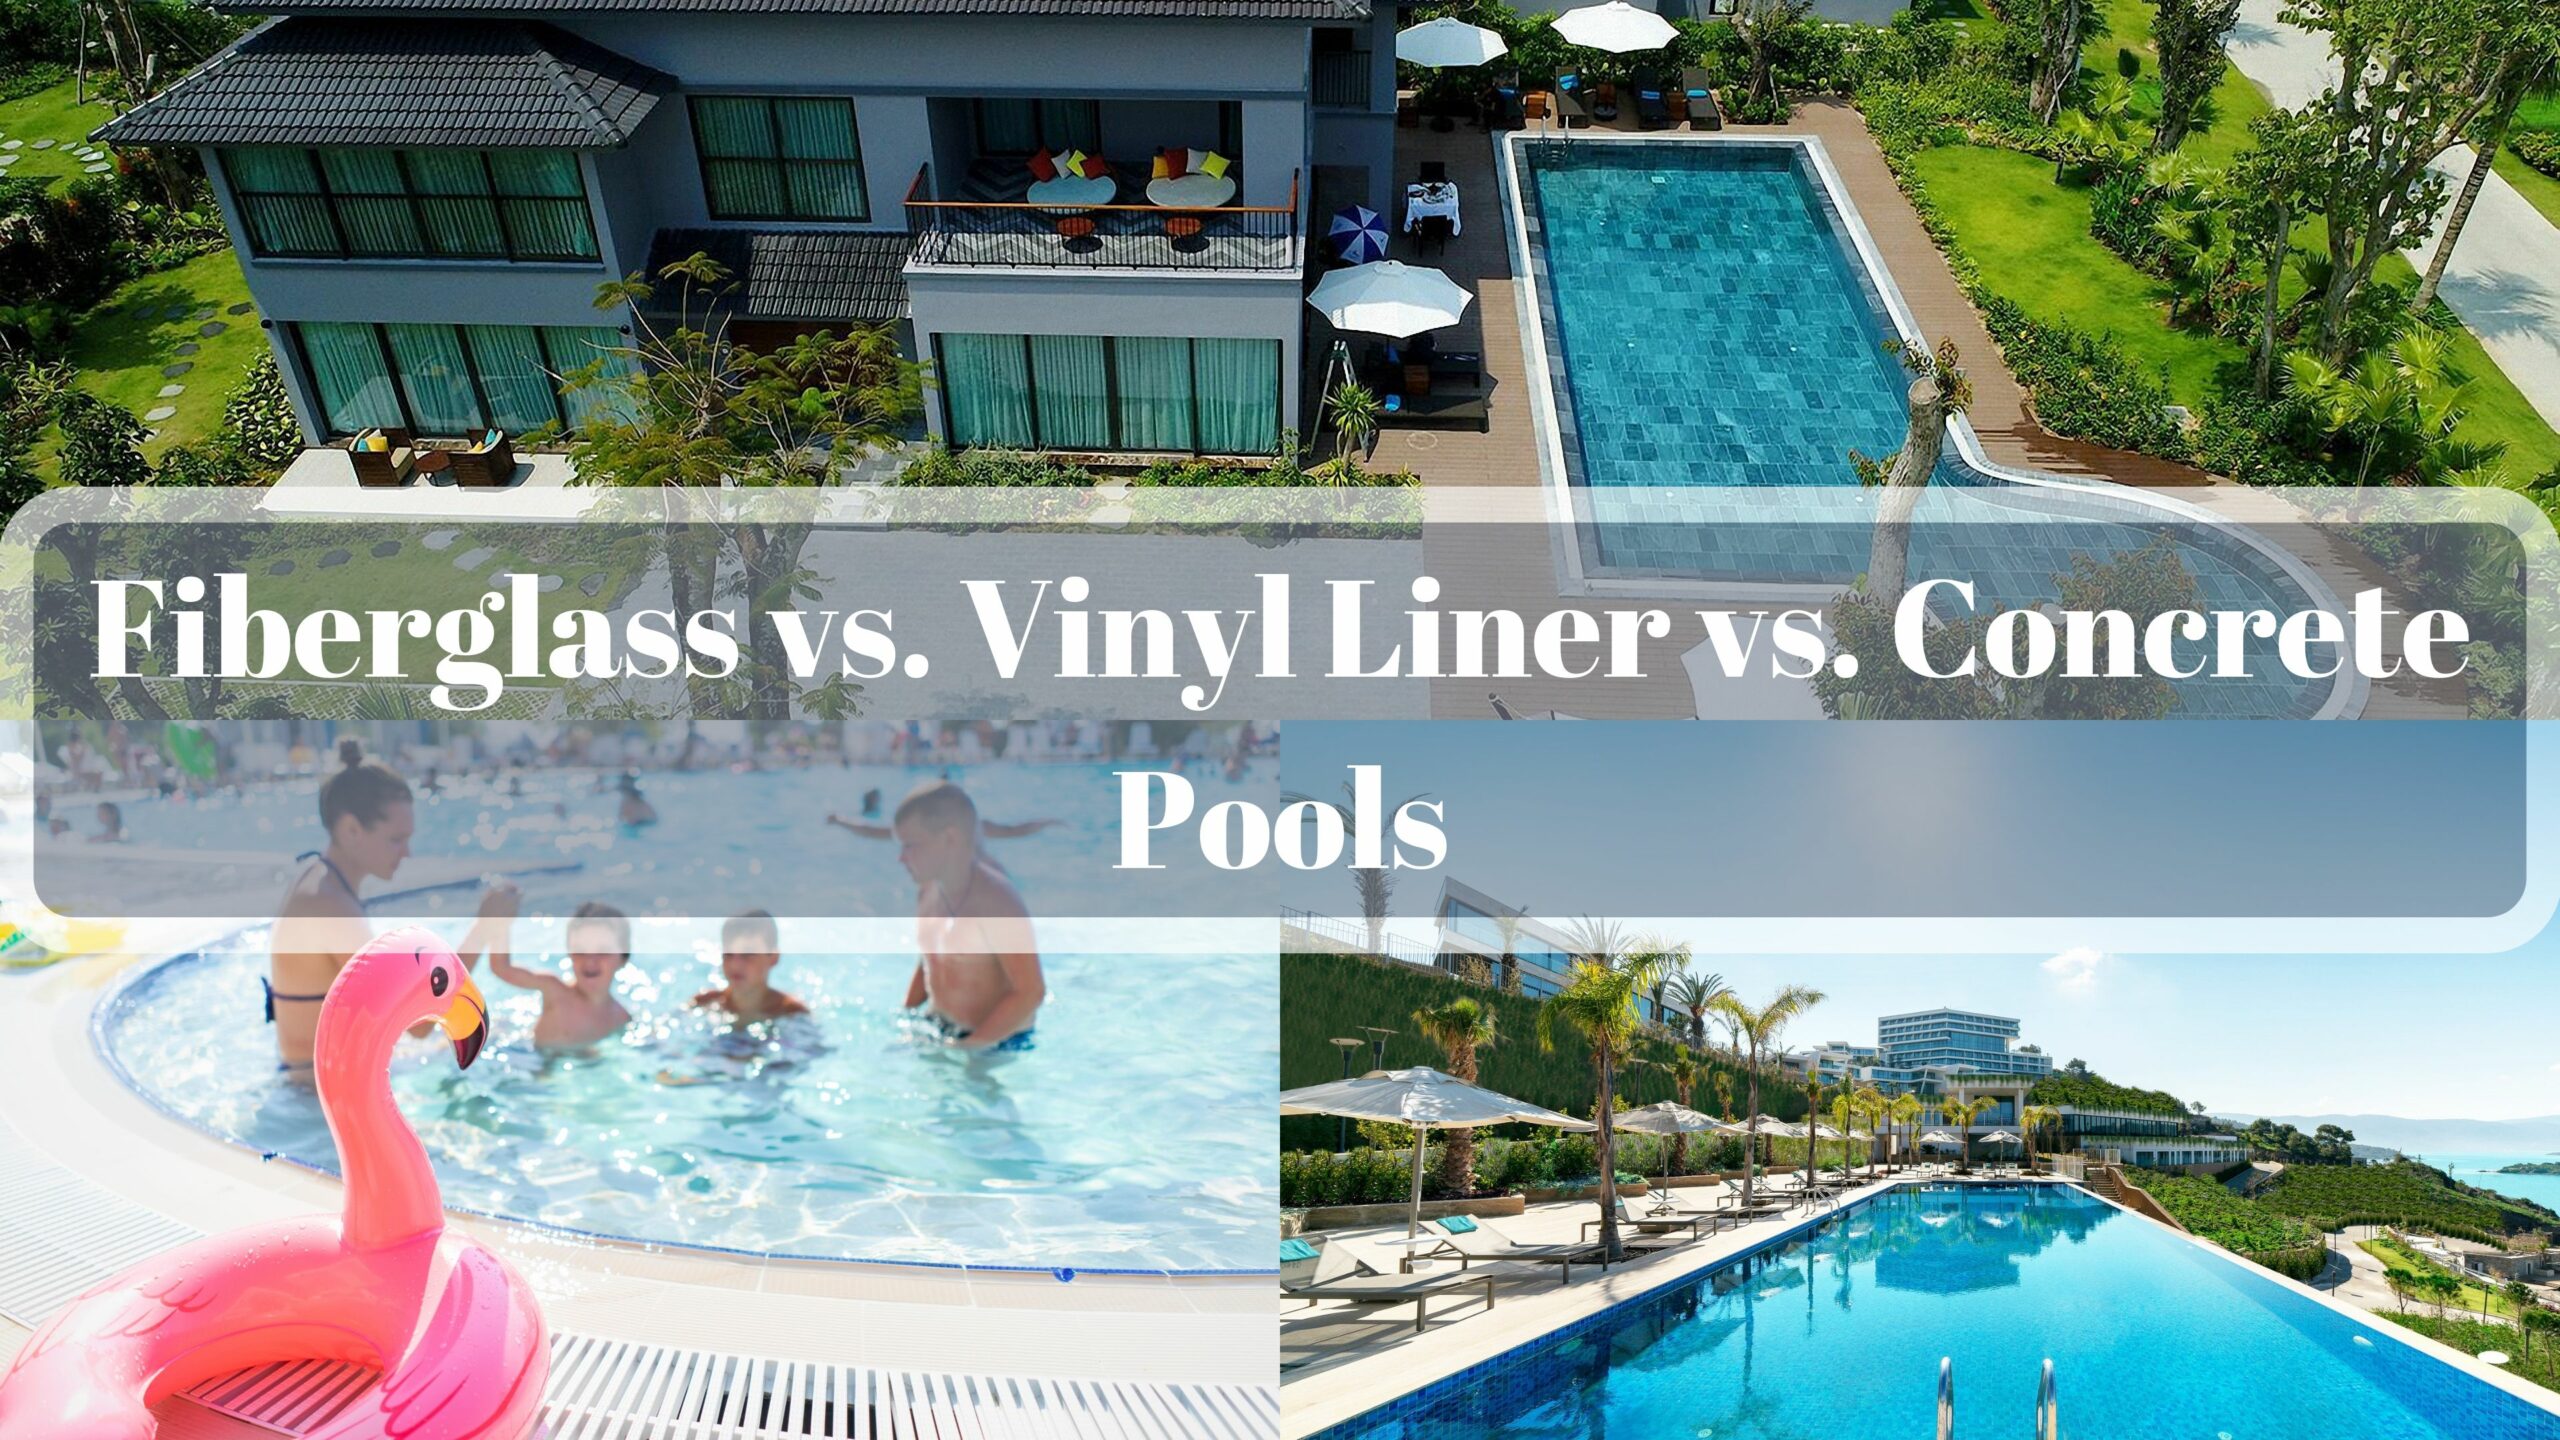 Fiberglass vs. Vinyl Liner vs. Concrete Pools: An Honest Comparison